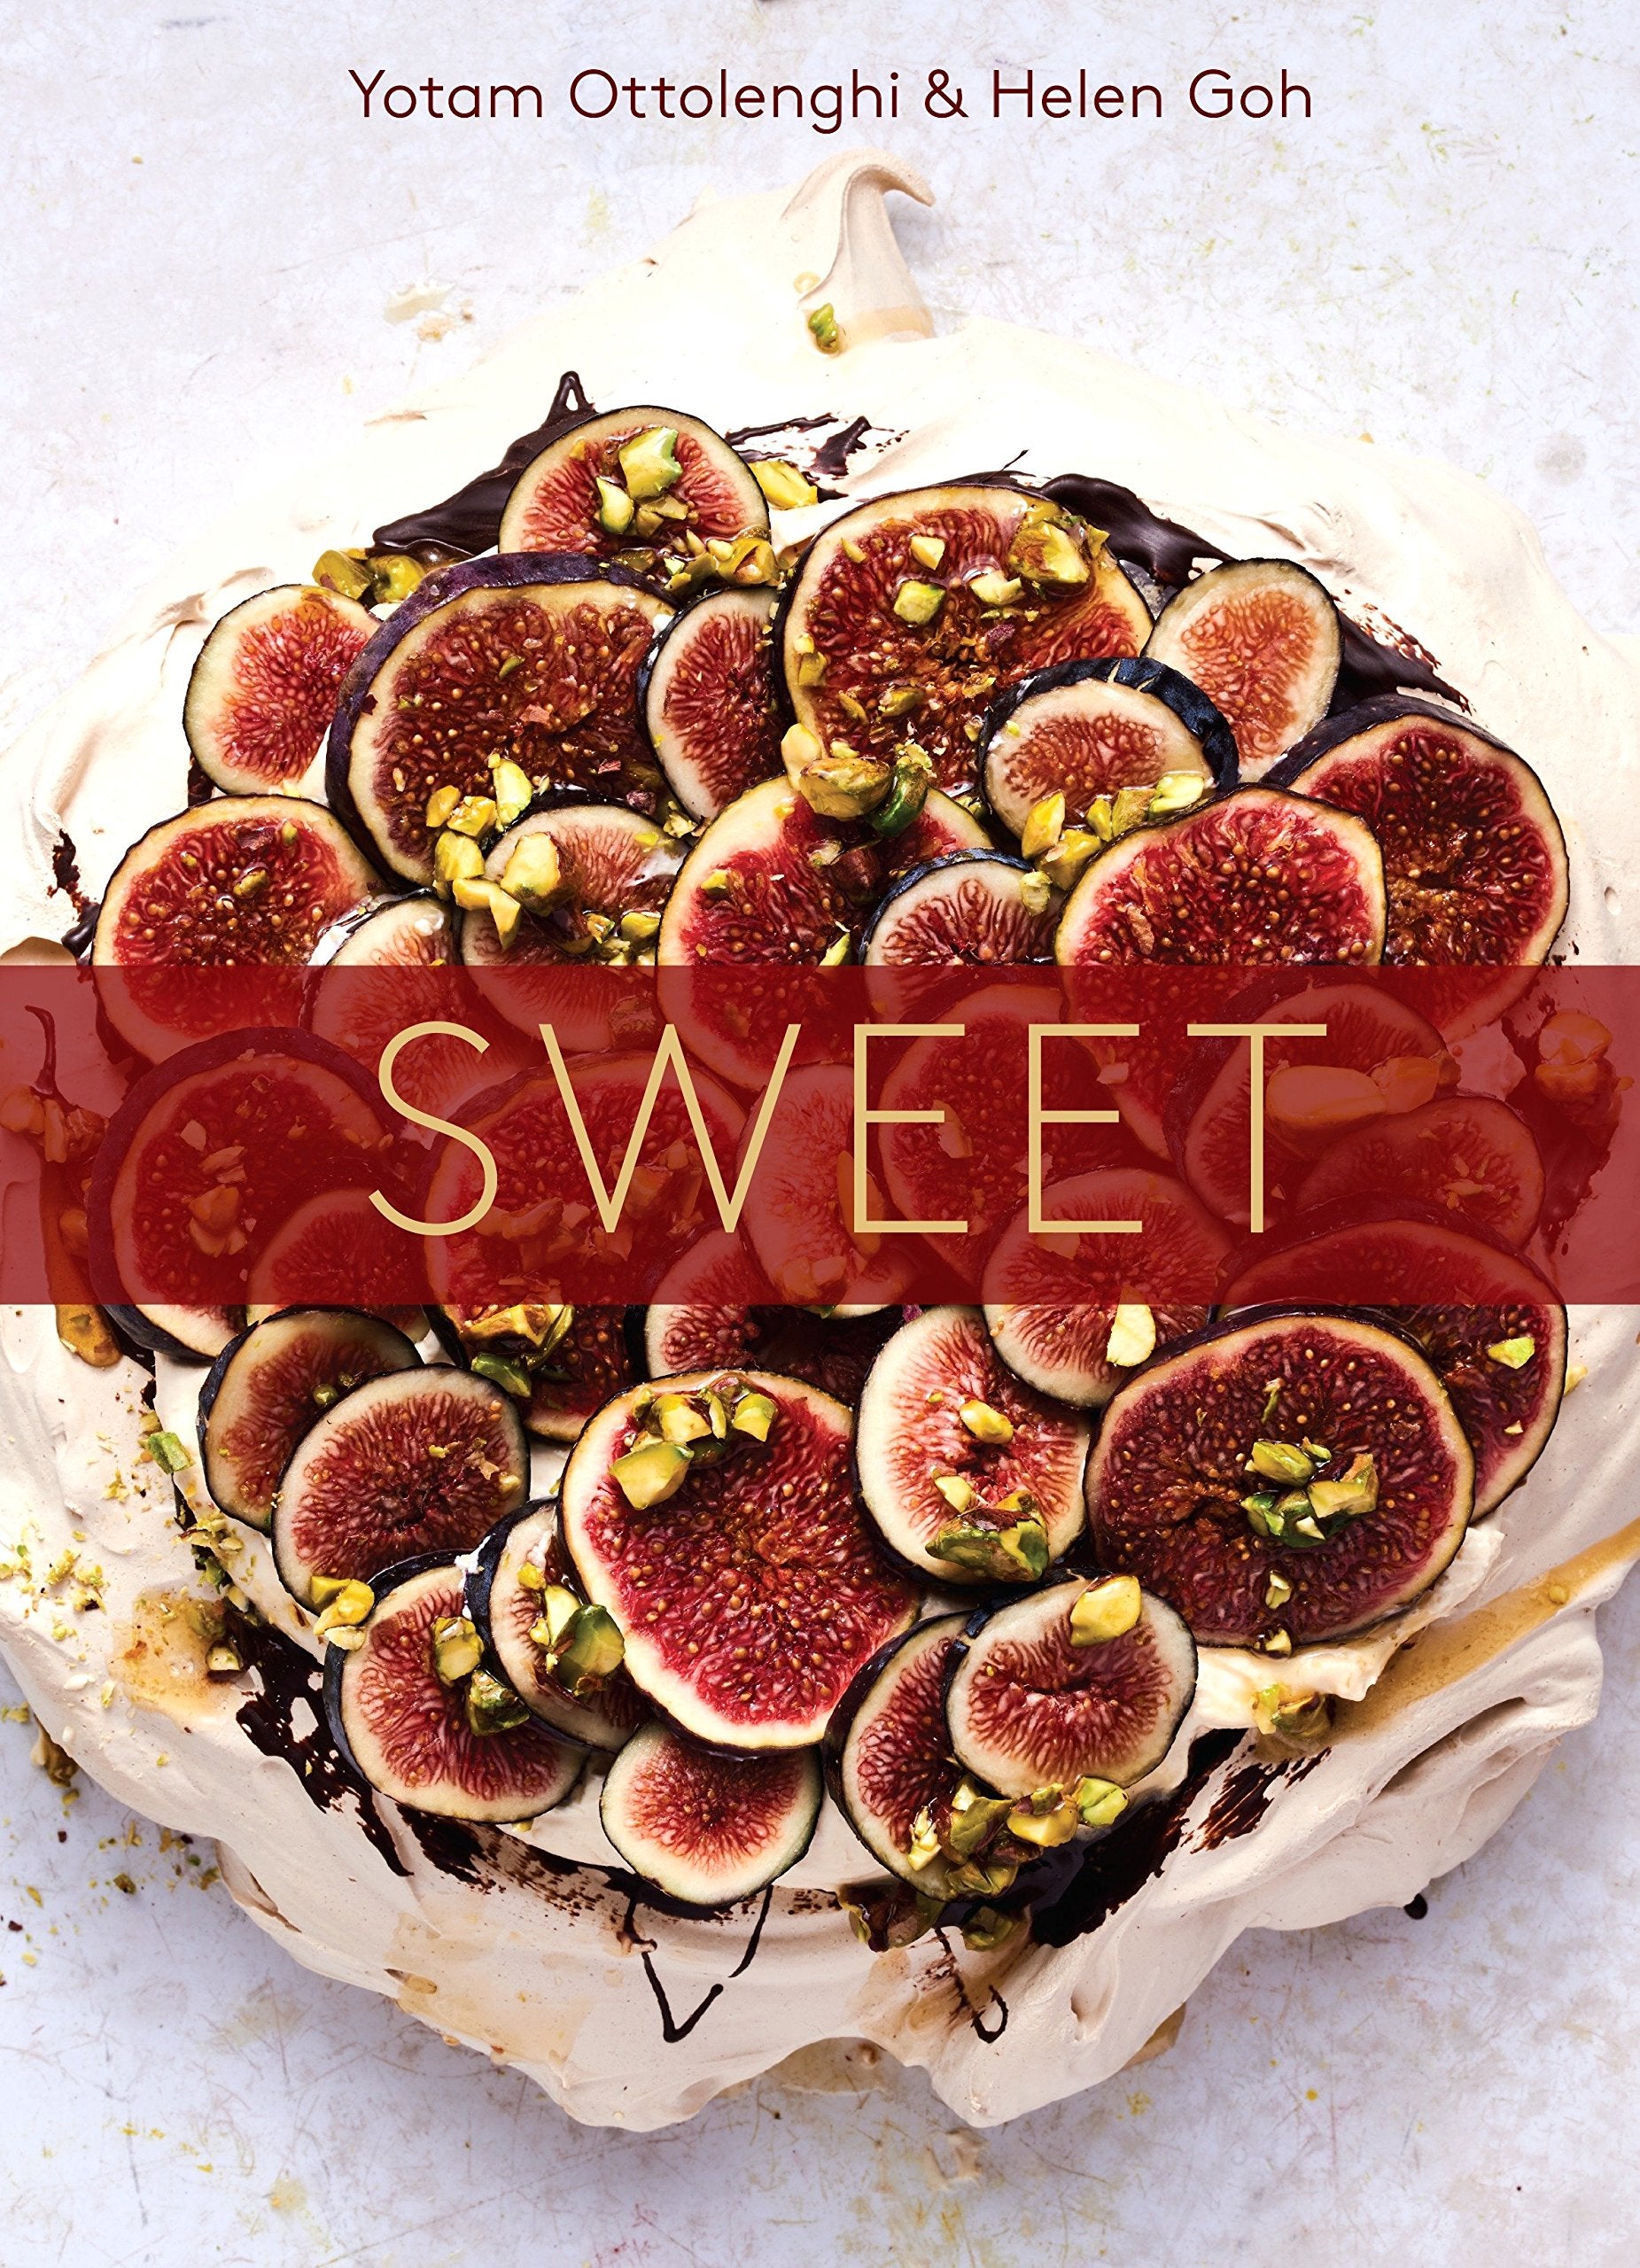 Sweet: Desserts from London's Ottolenghi (Yotam Ottolenghi, Helen Goh) *Signed*